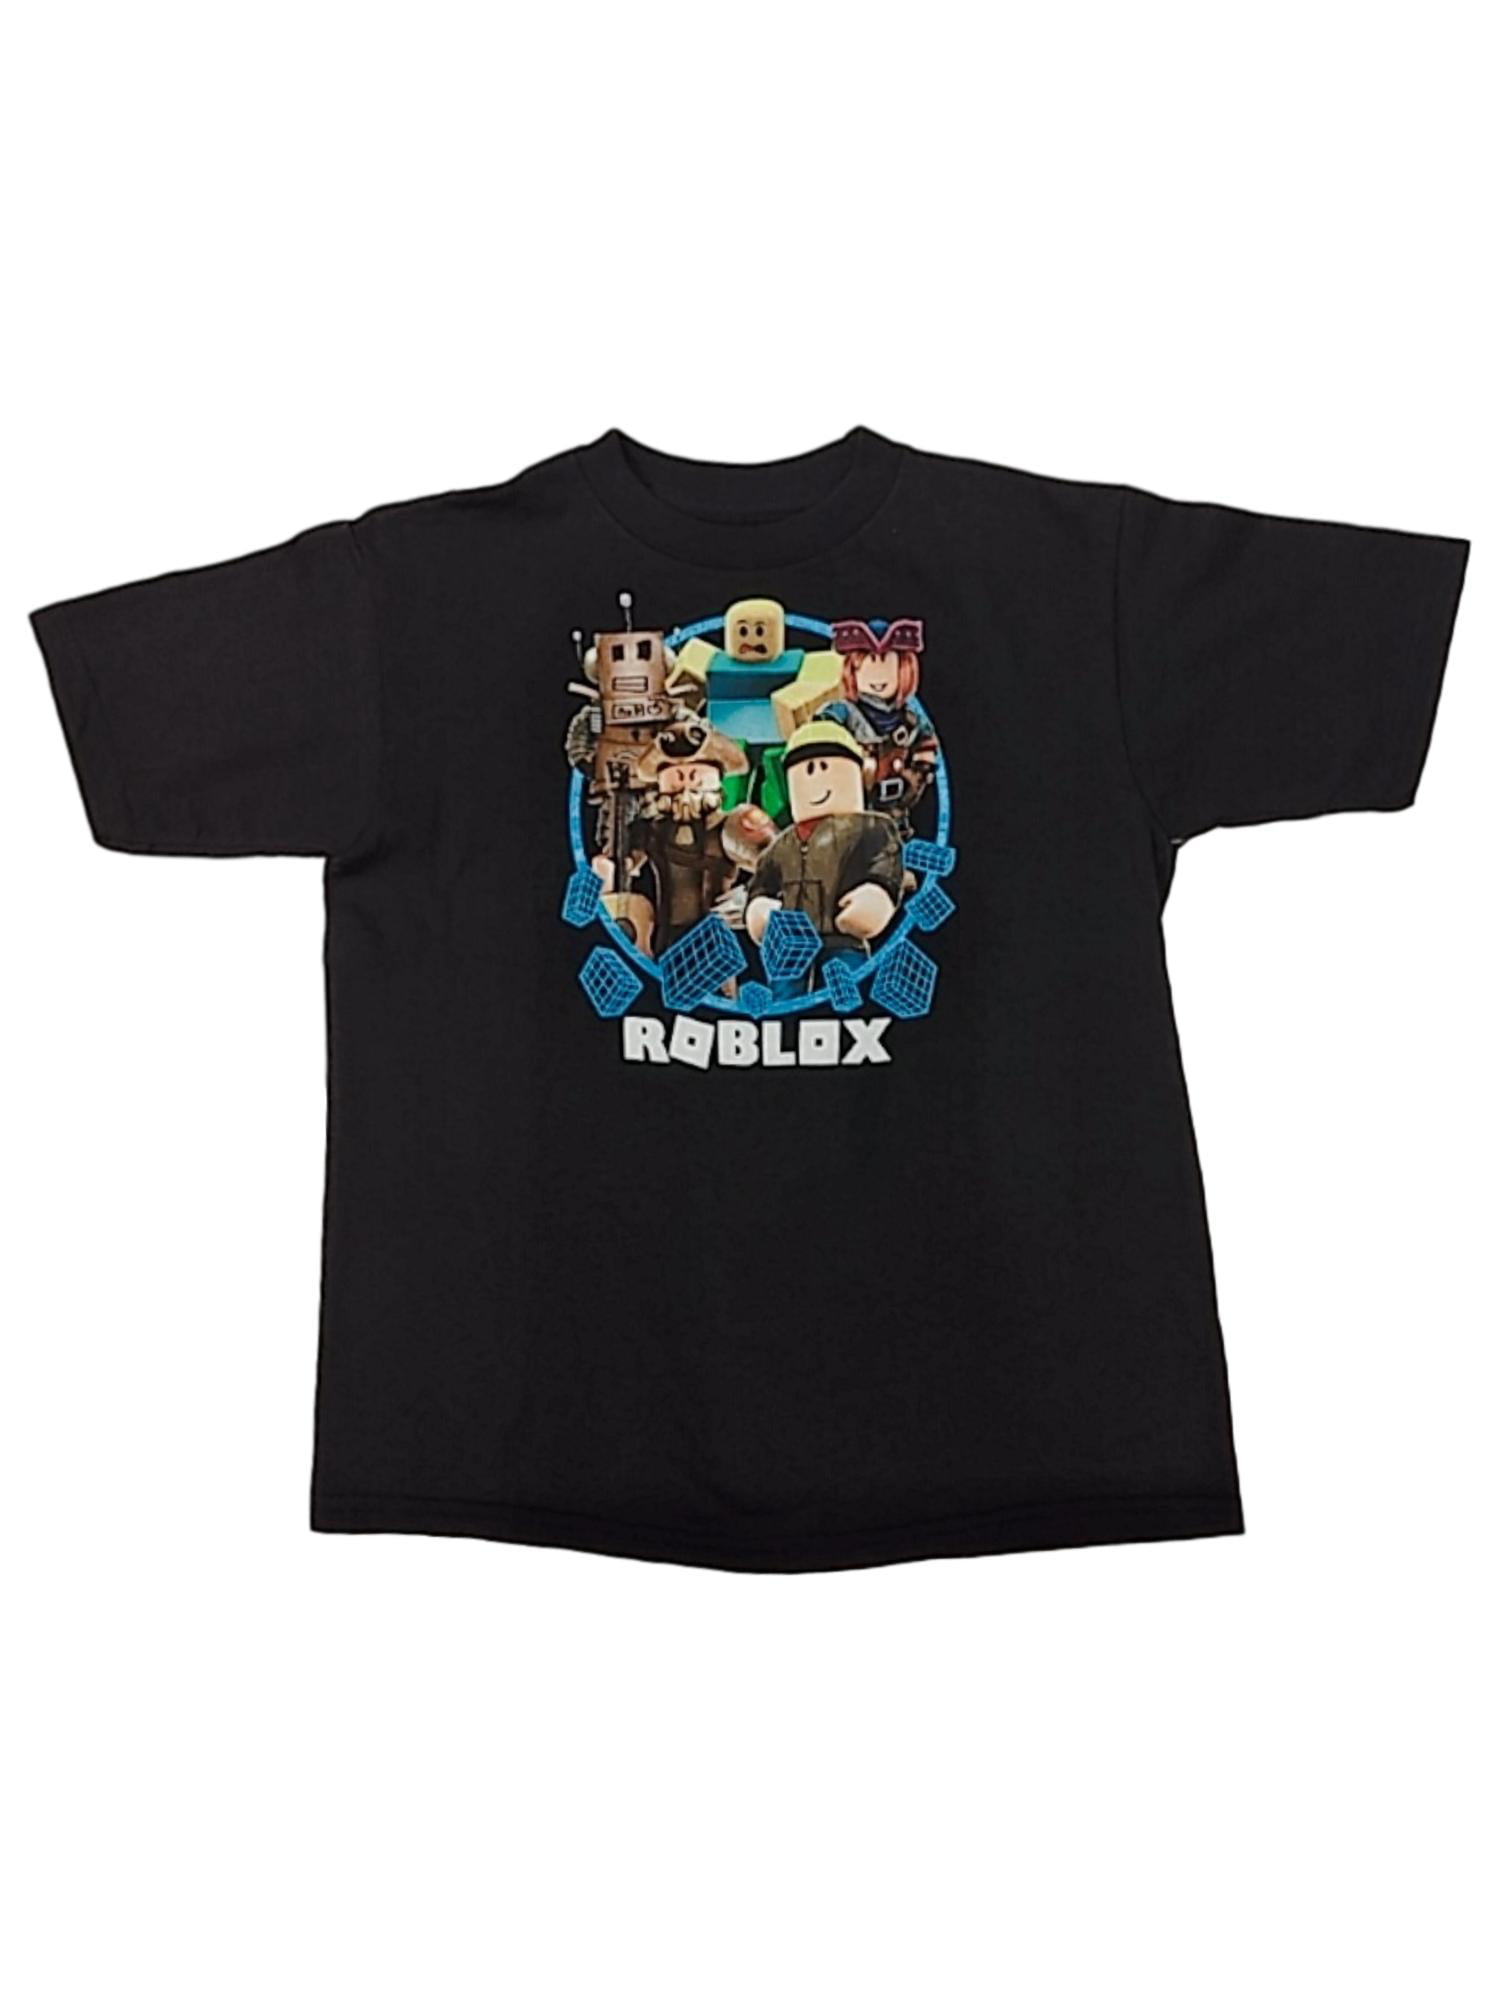 Boys Black Roblox Multi Character T Shirt Graphic Tee Shirt Large 6 7 Walmart Com Walmart Com - roblox ad size top